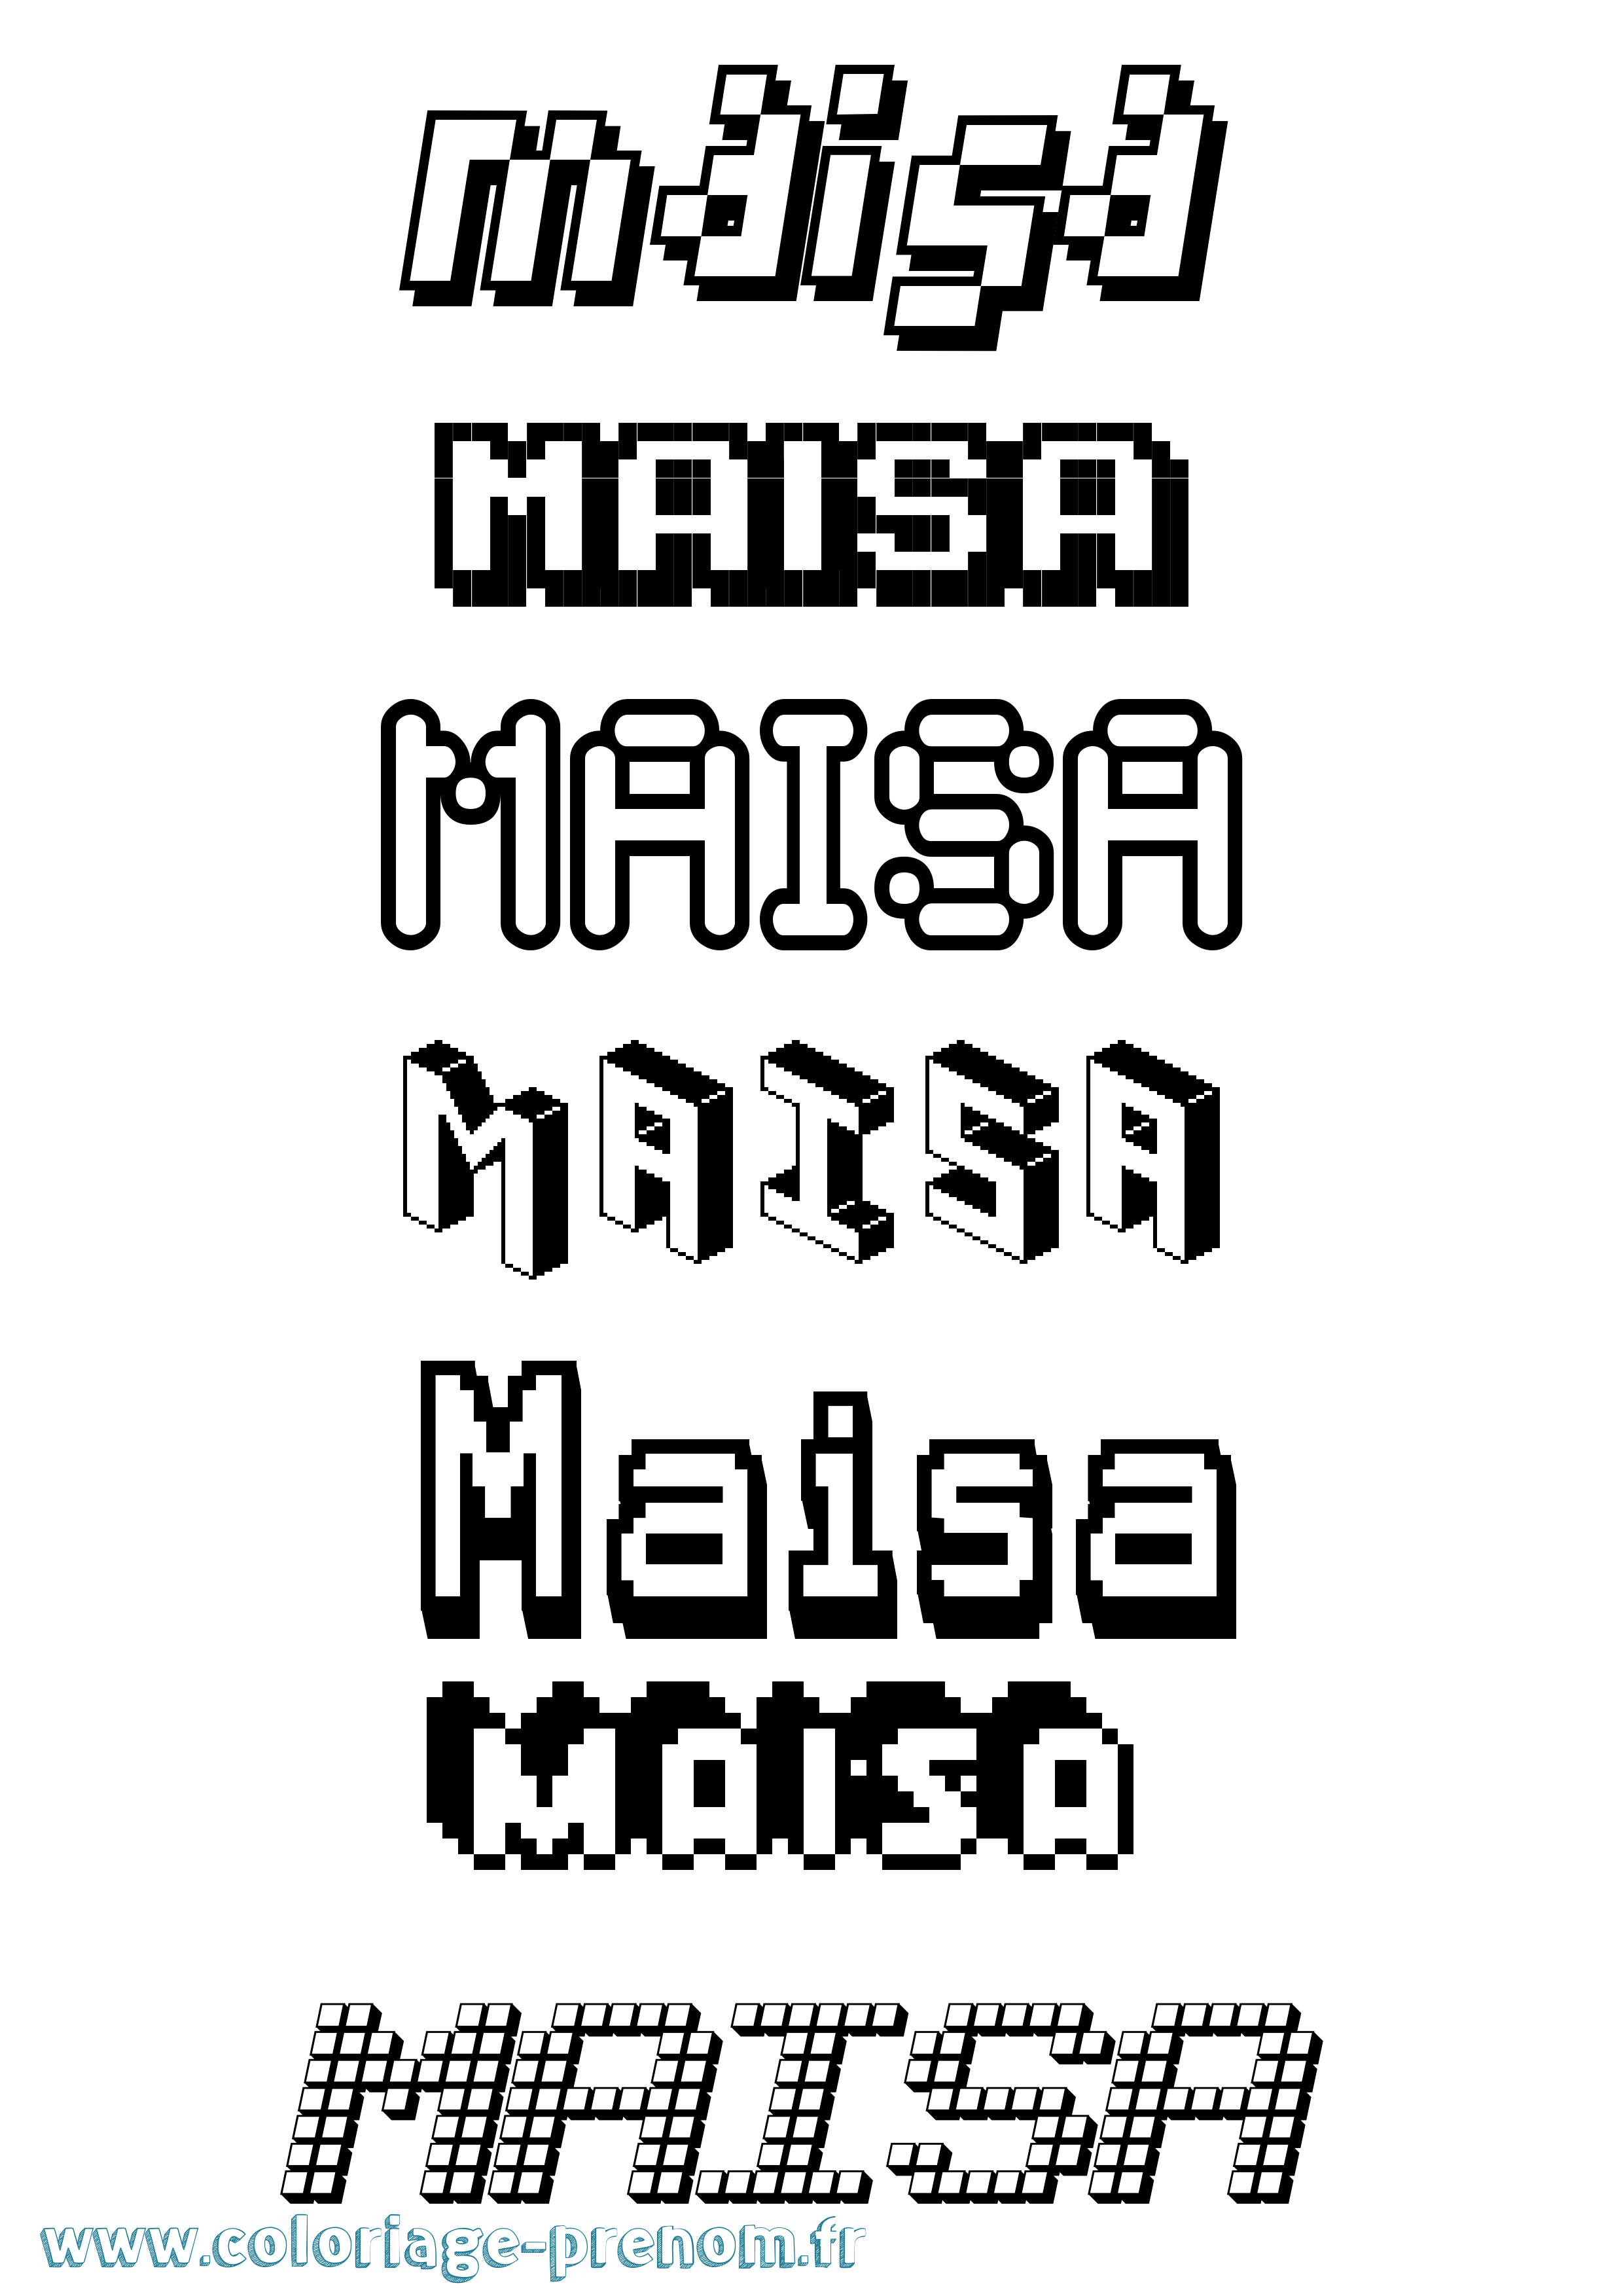 Coloriage prénom Maisa Pixel